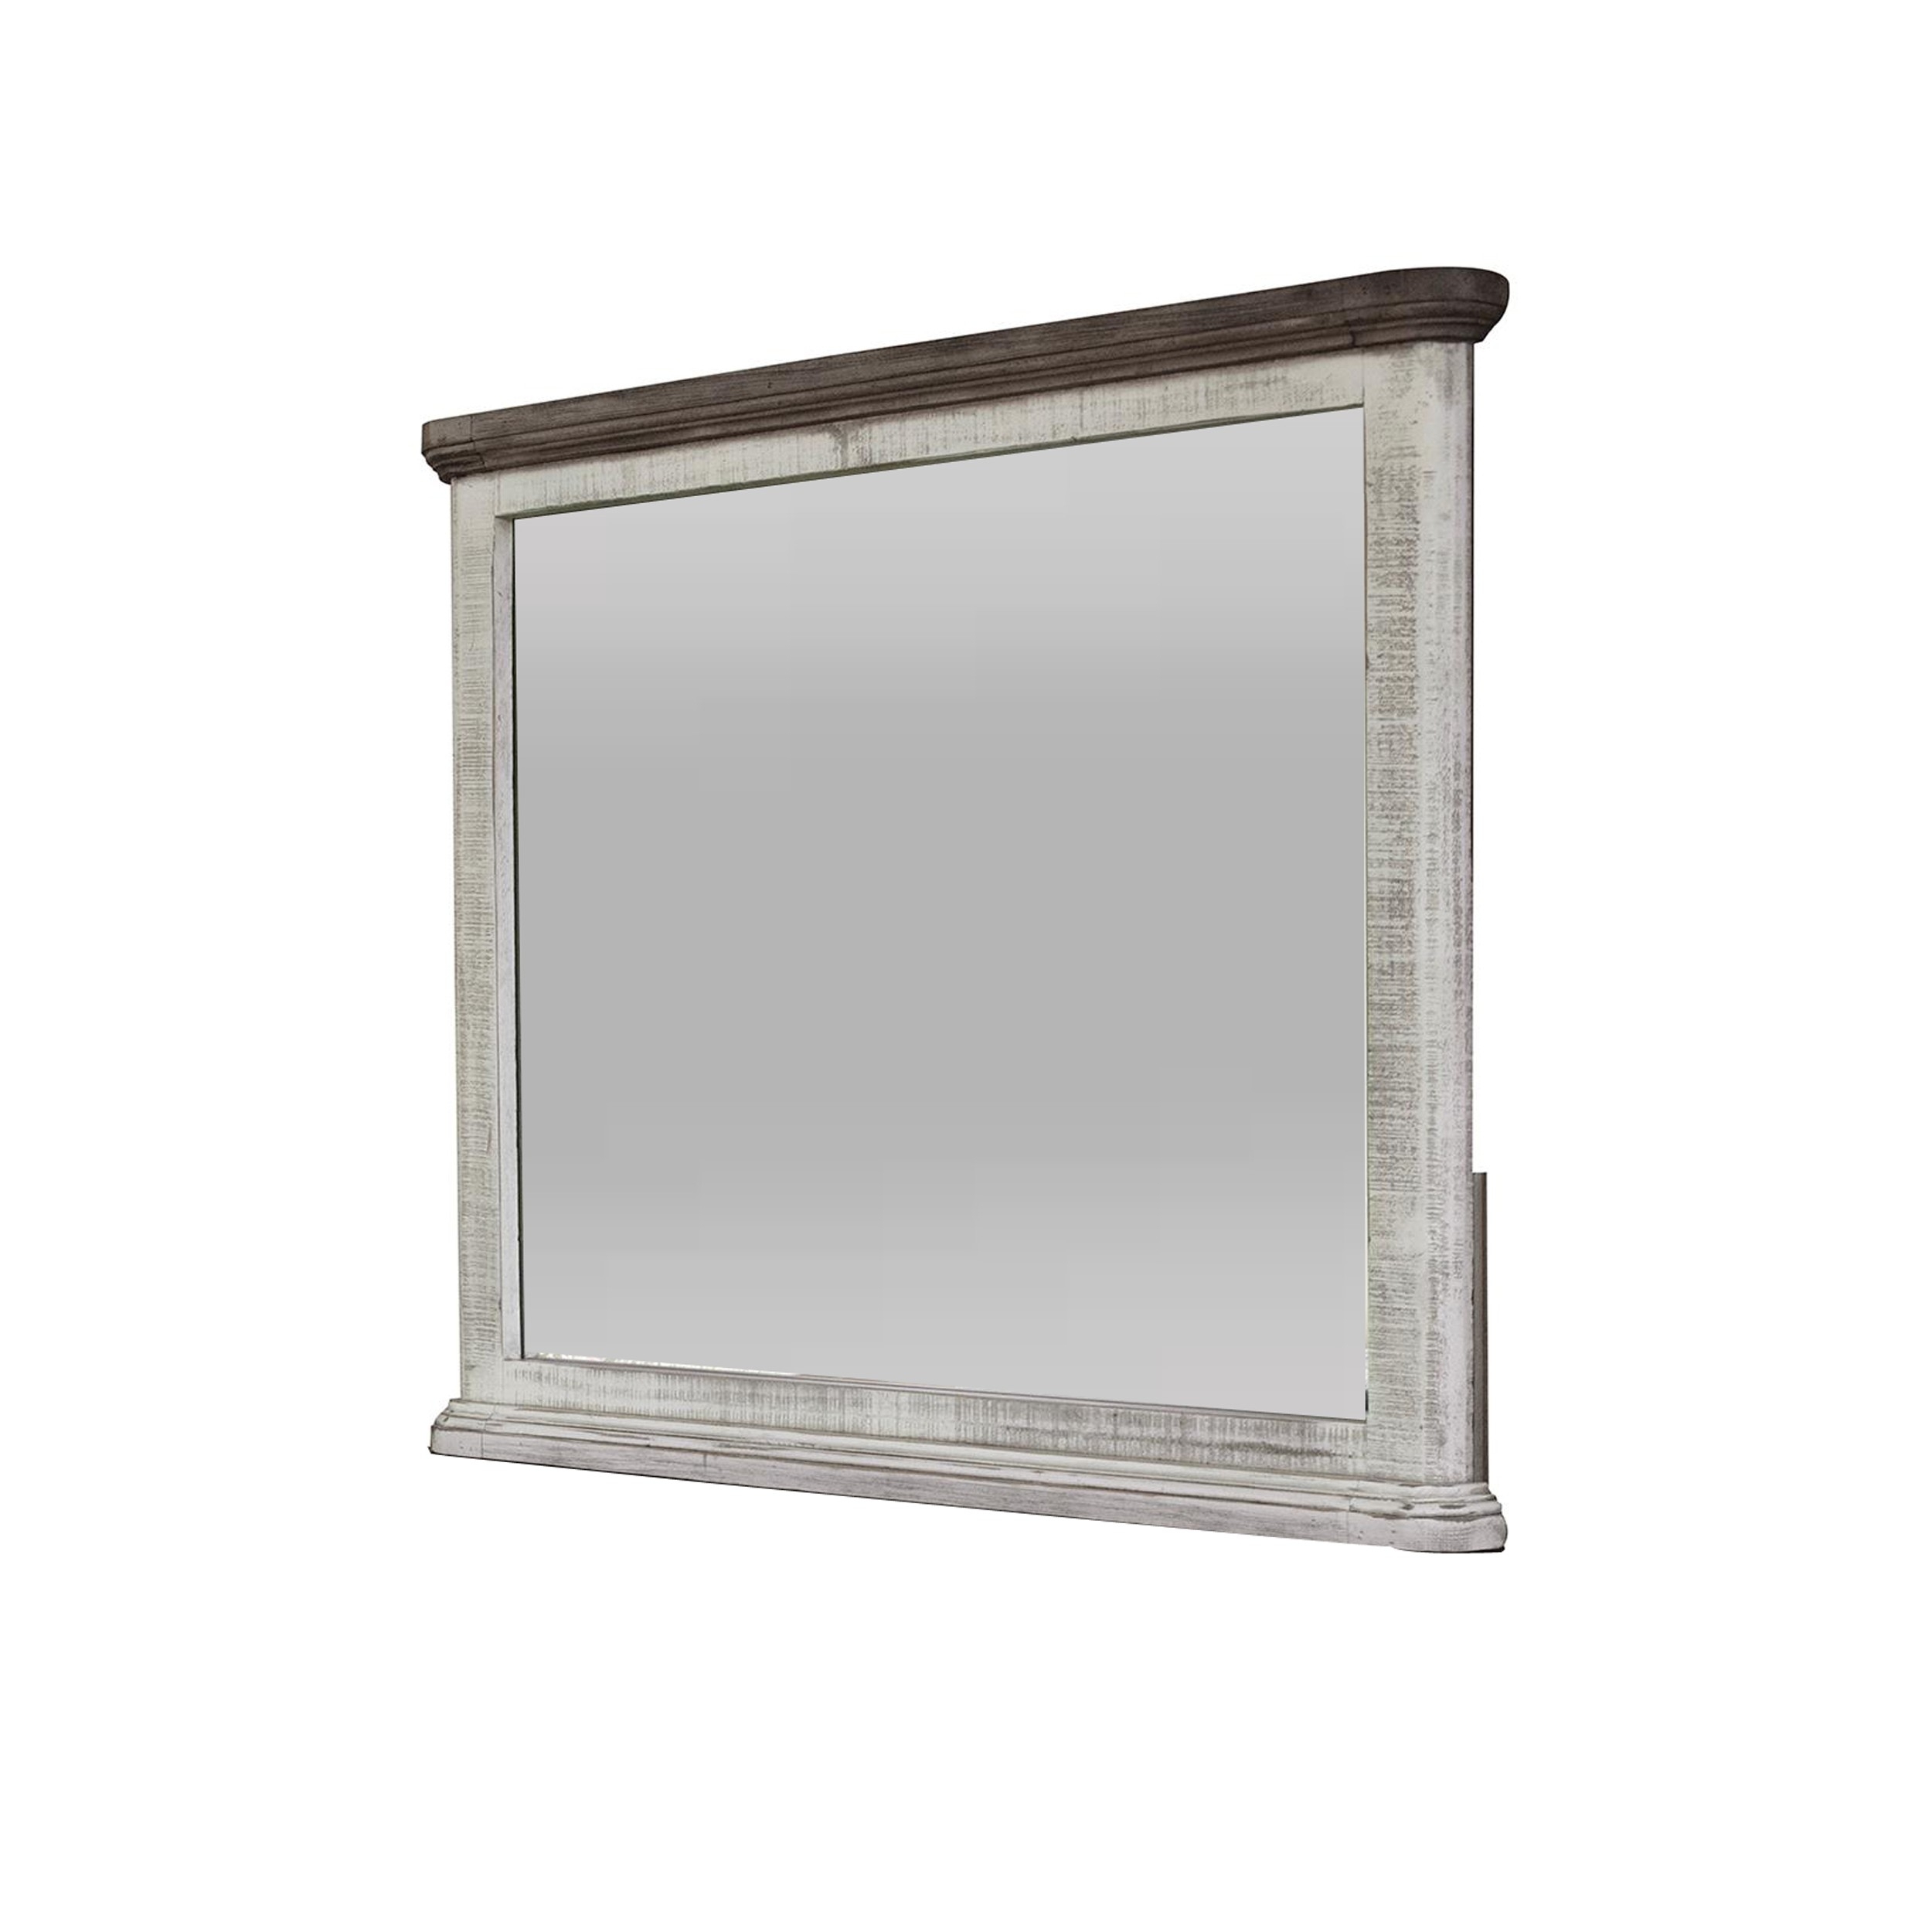 Feyi 41 Inch Classic Mirror, Hand Rubbed Finish, Off White, Top Gray Stain- Saltoro Sherpi